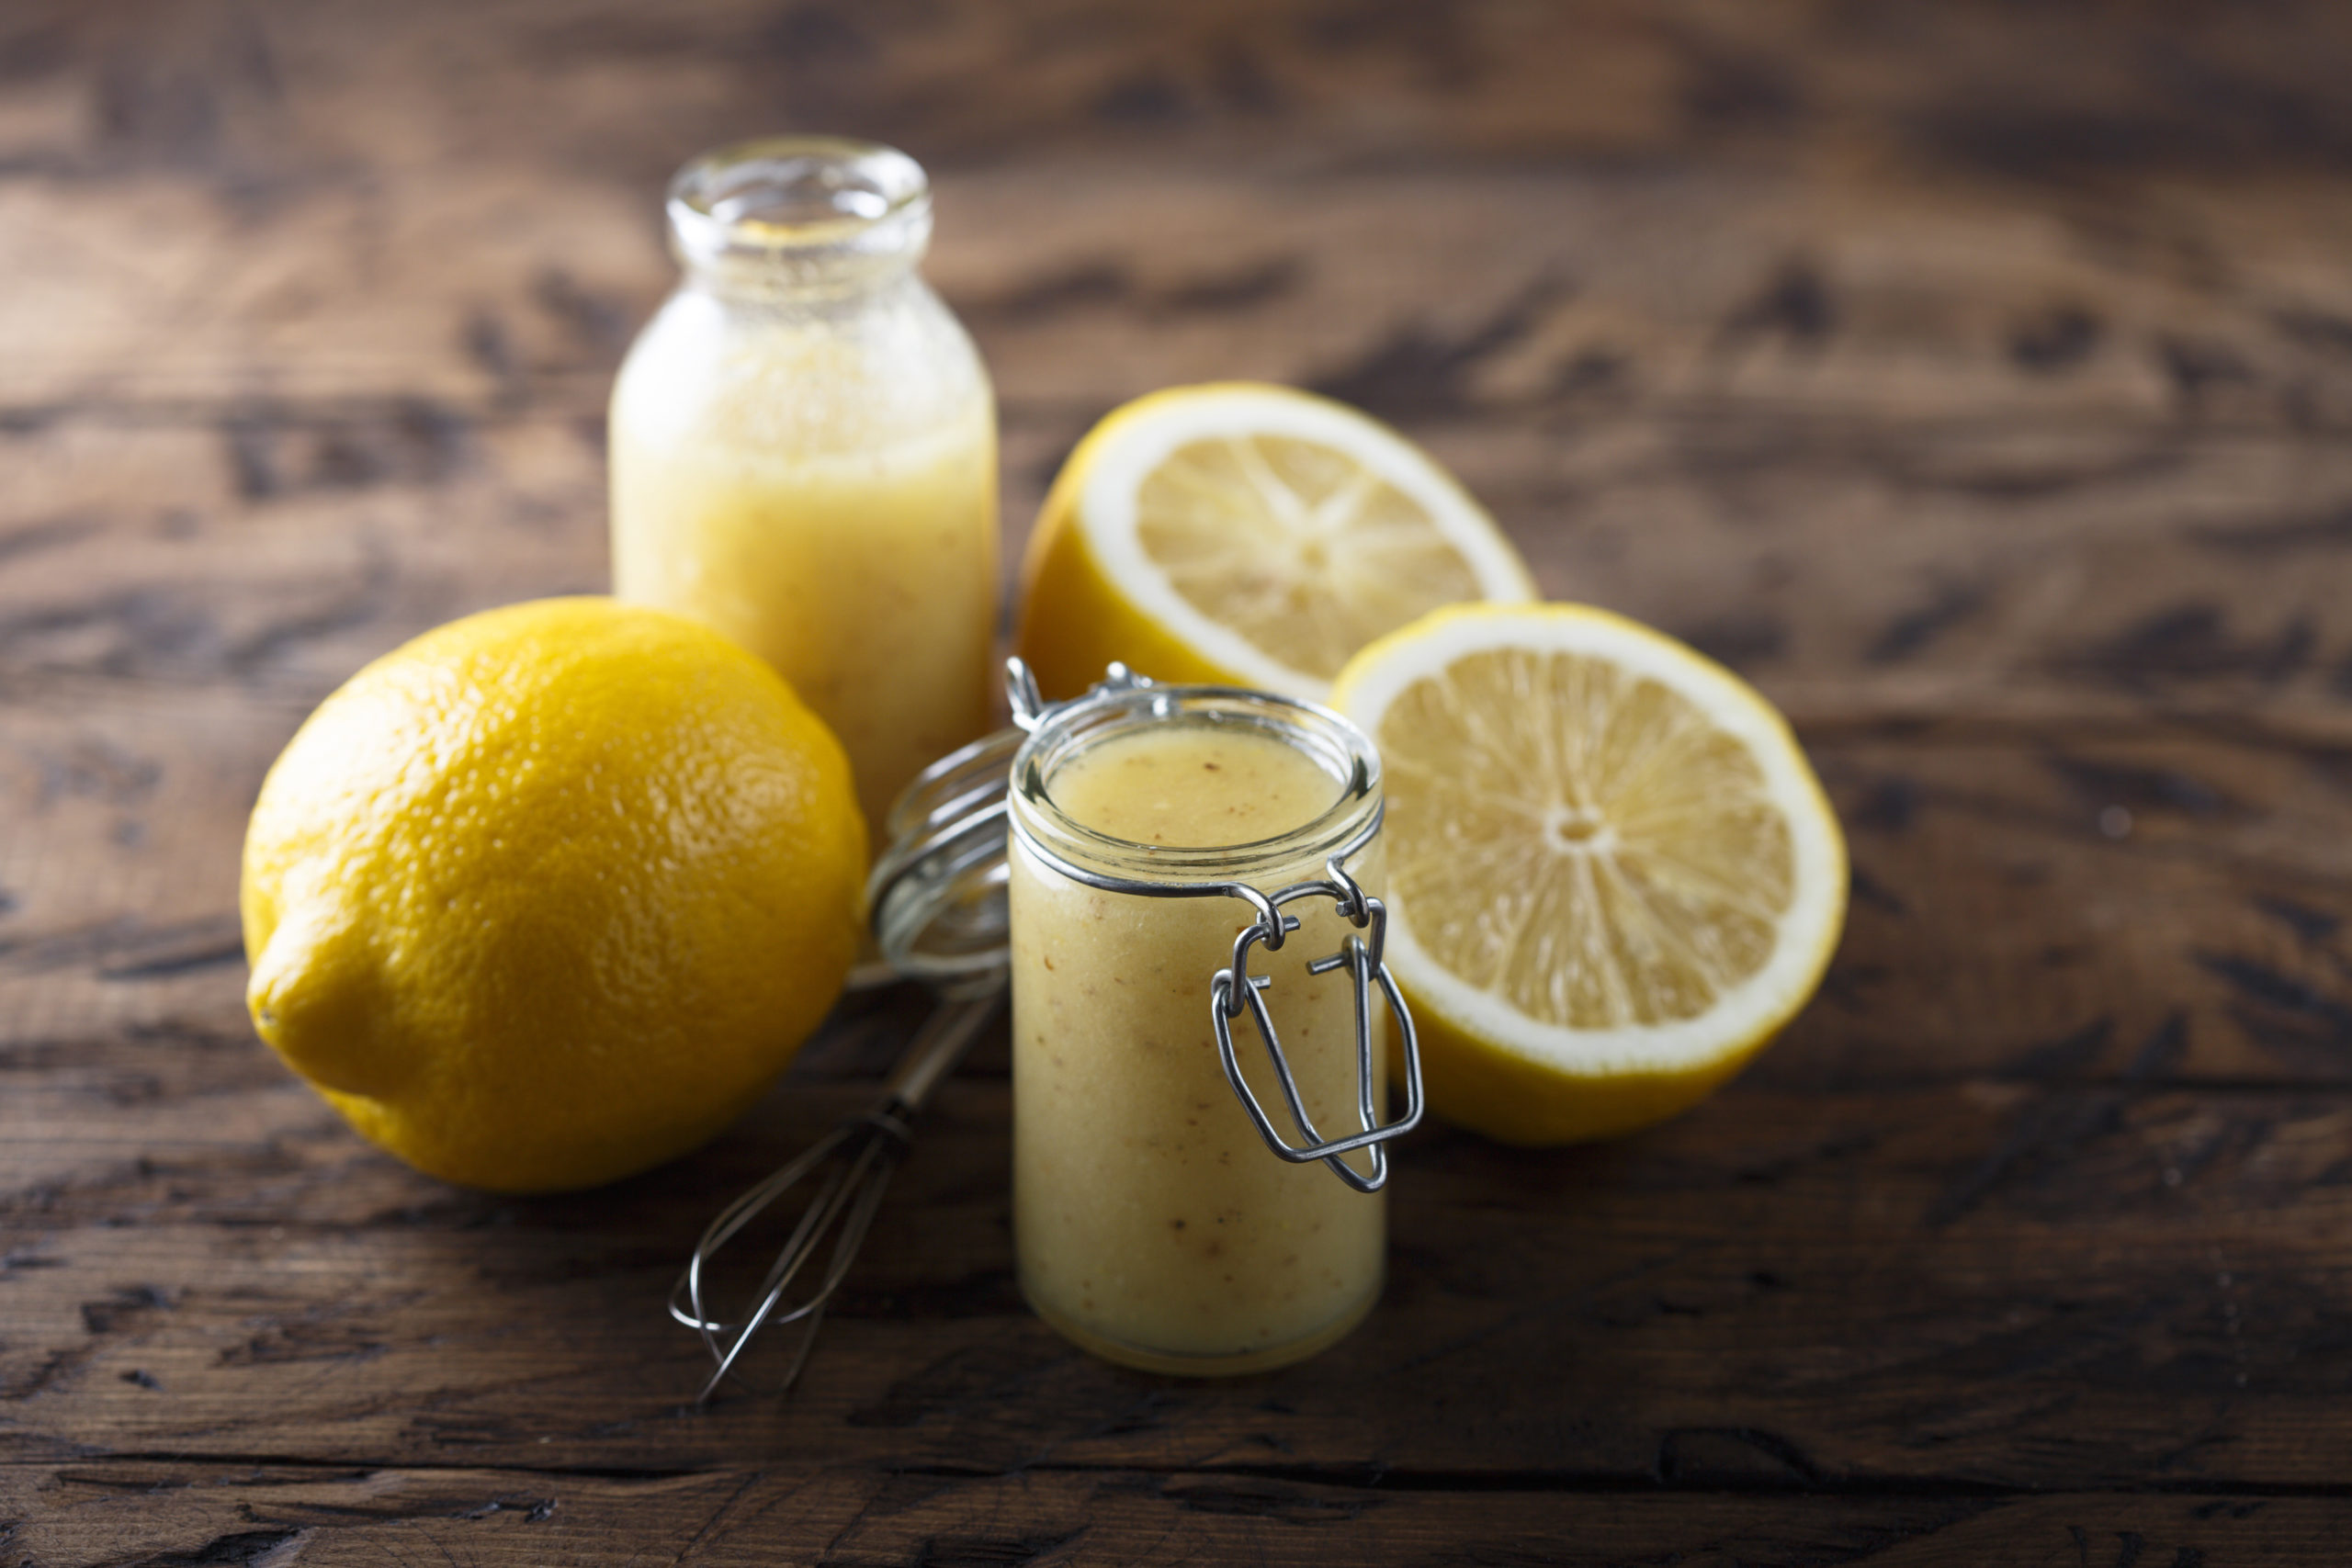 Lemon Basil Vinaigrette